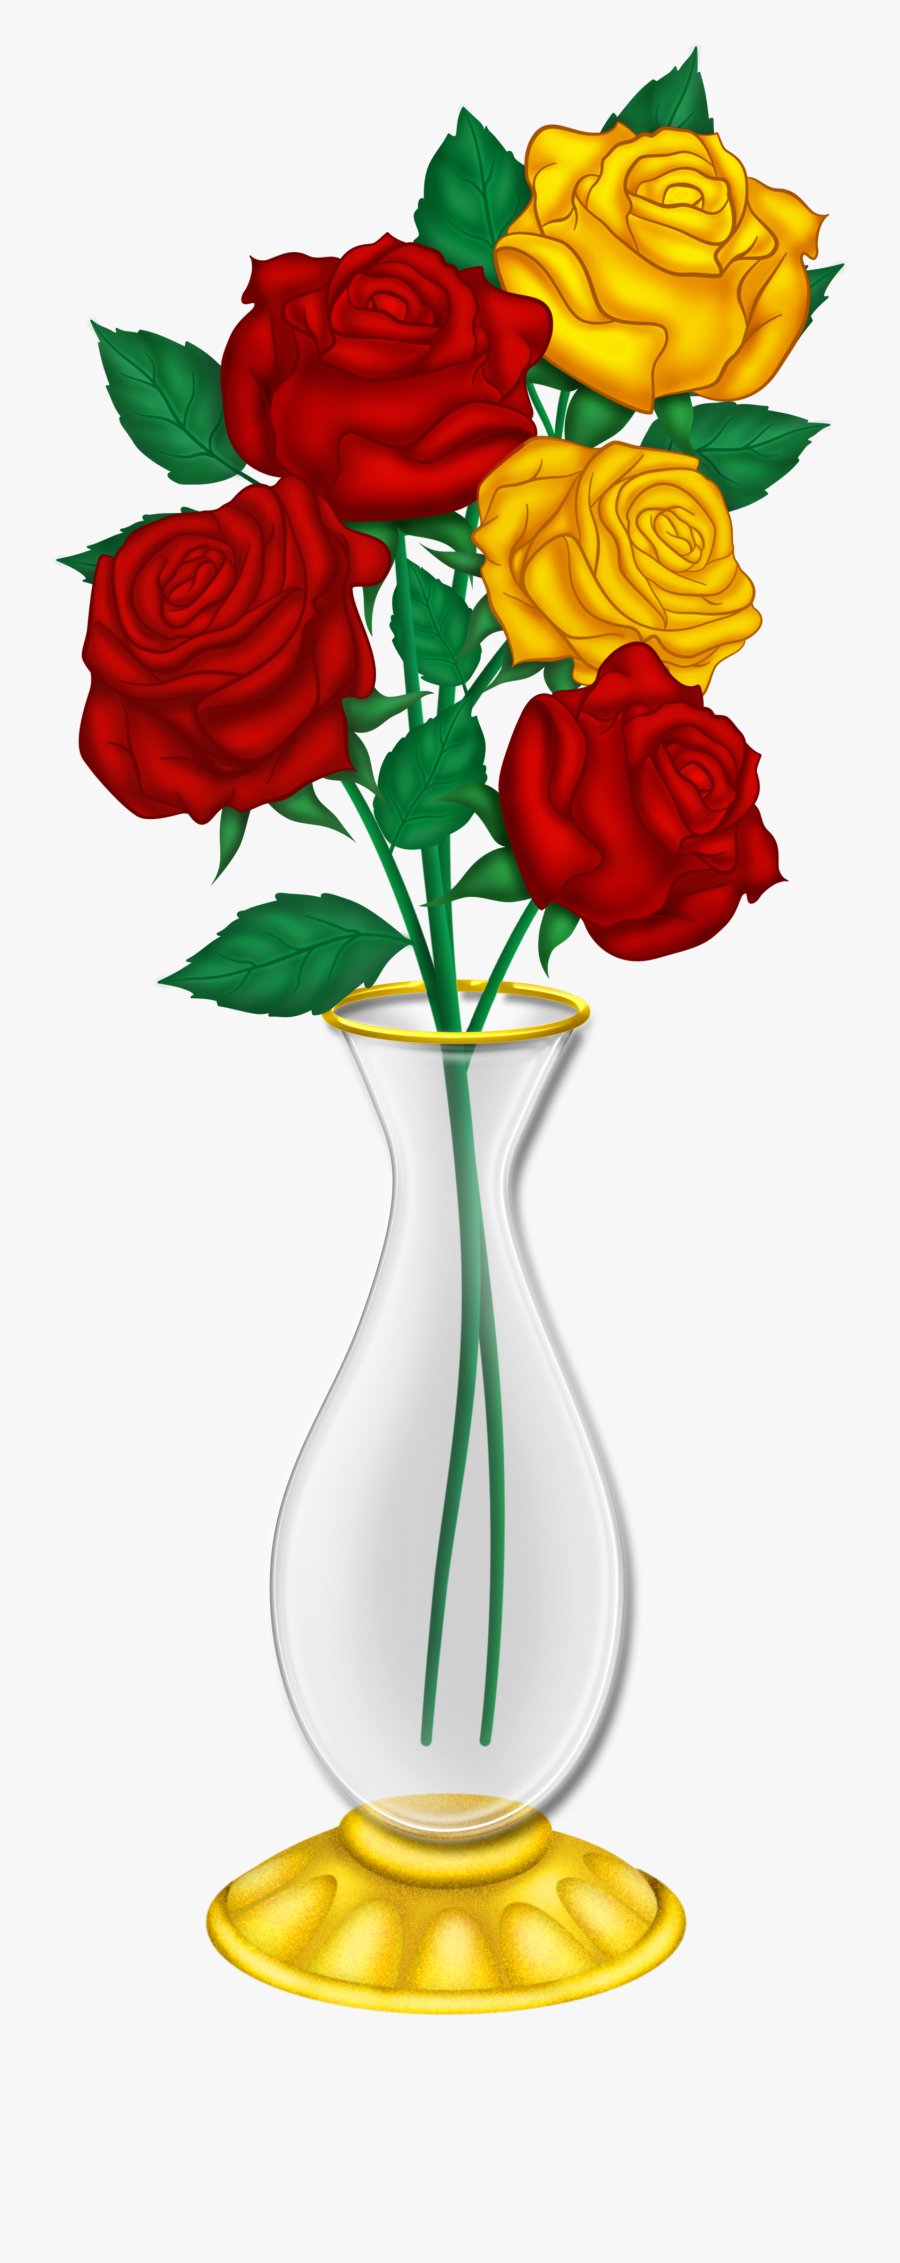 Svg Transparent Library Flowers In Vase Clipart - Red And Yellow Roses Clipart, Transparent Clipart